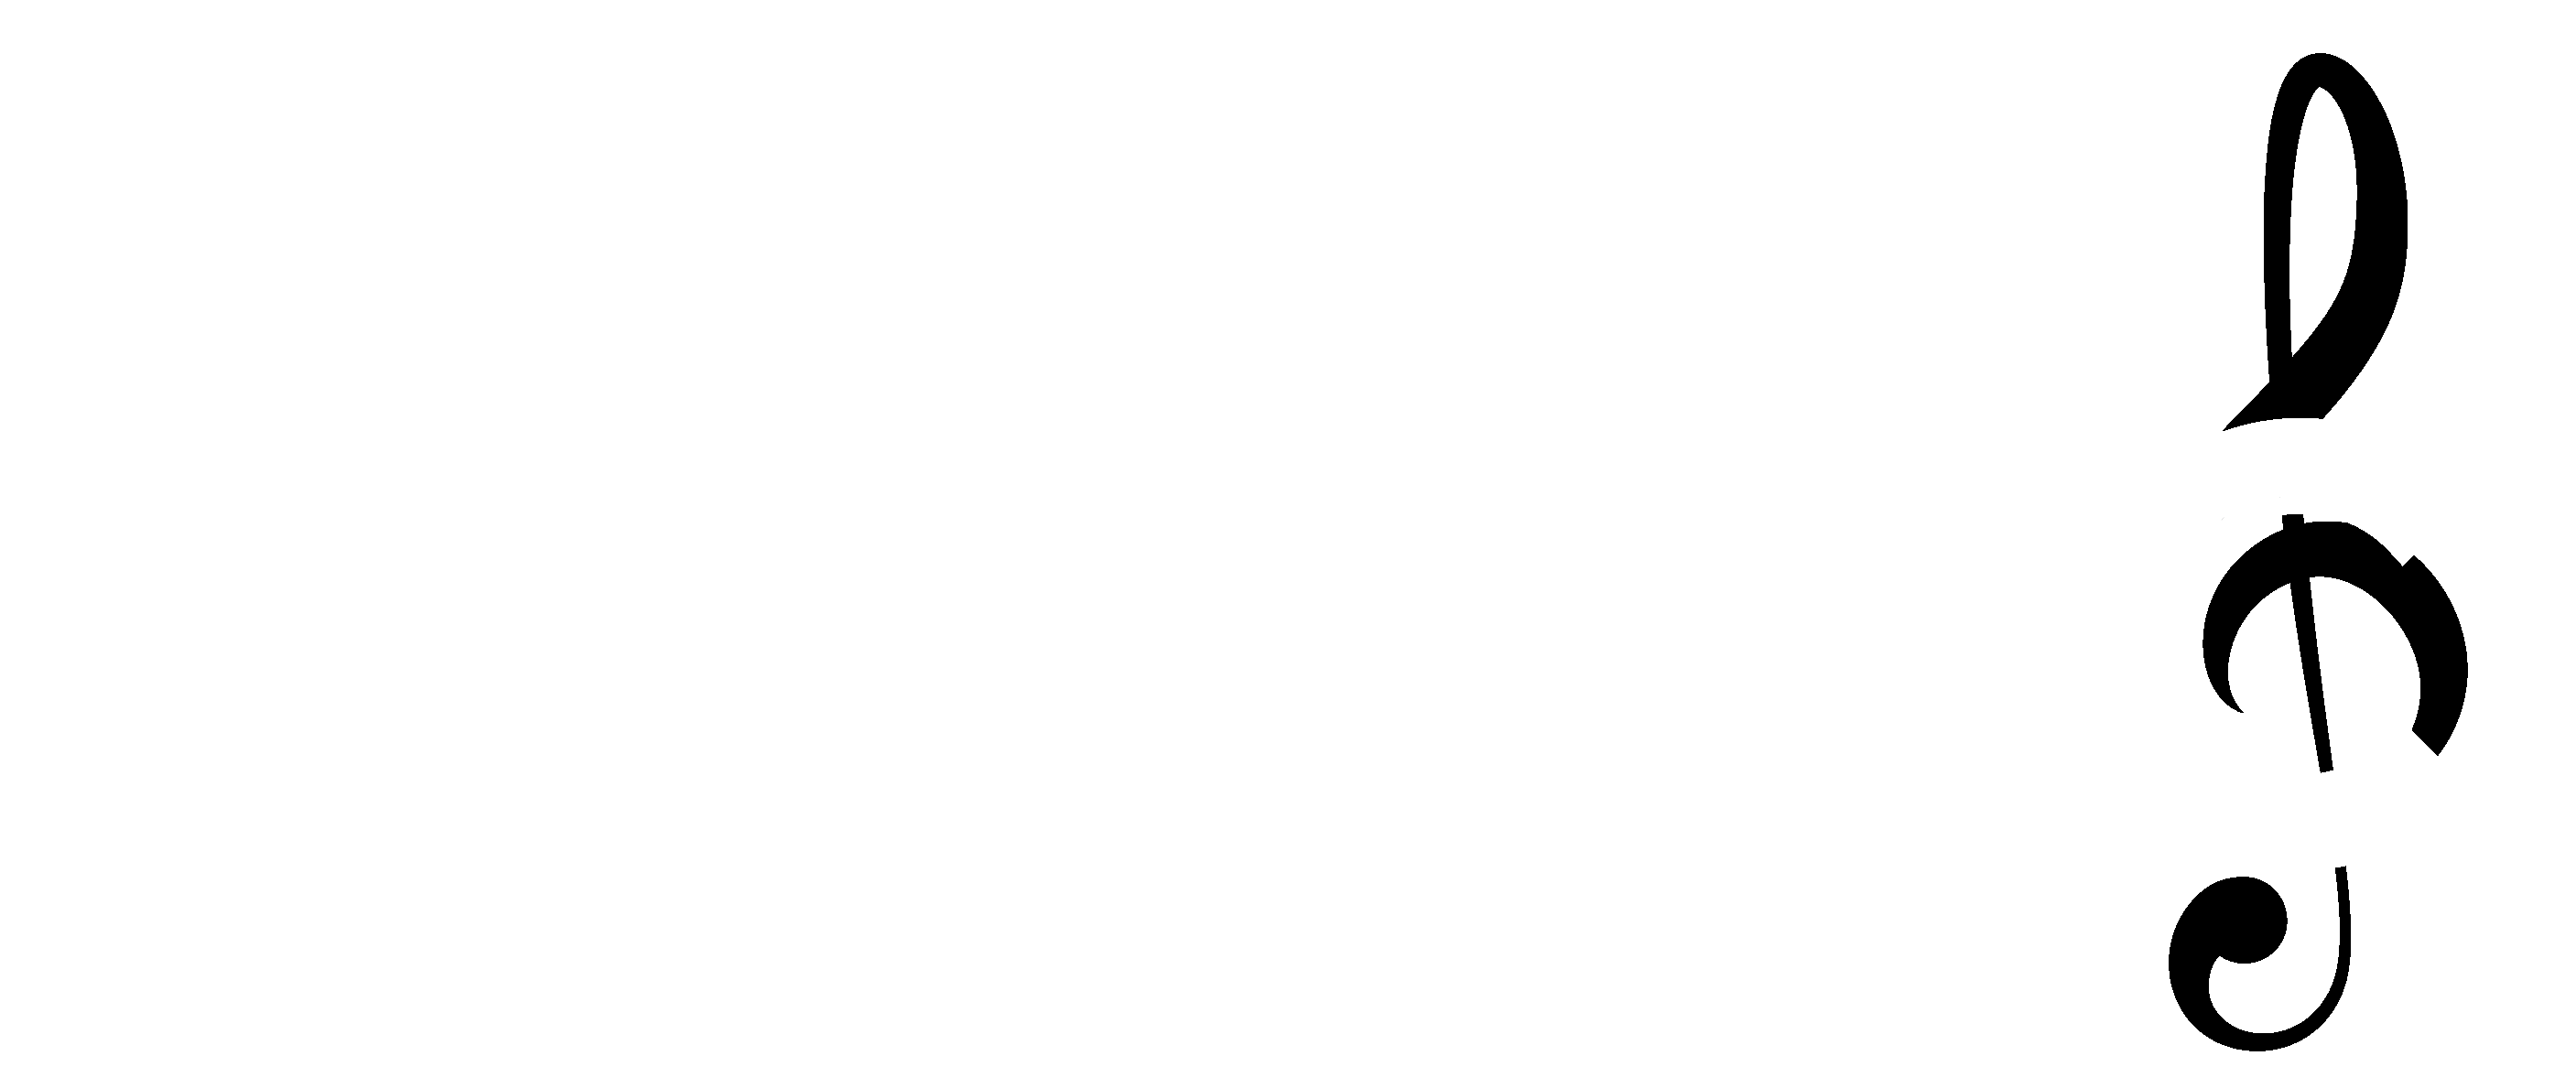 Beyond the C